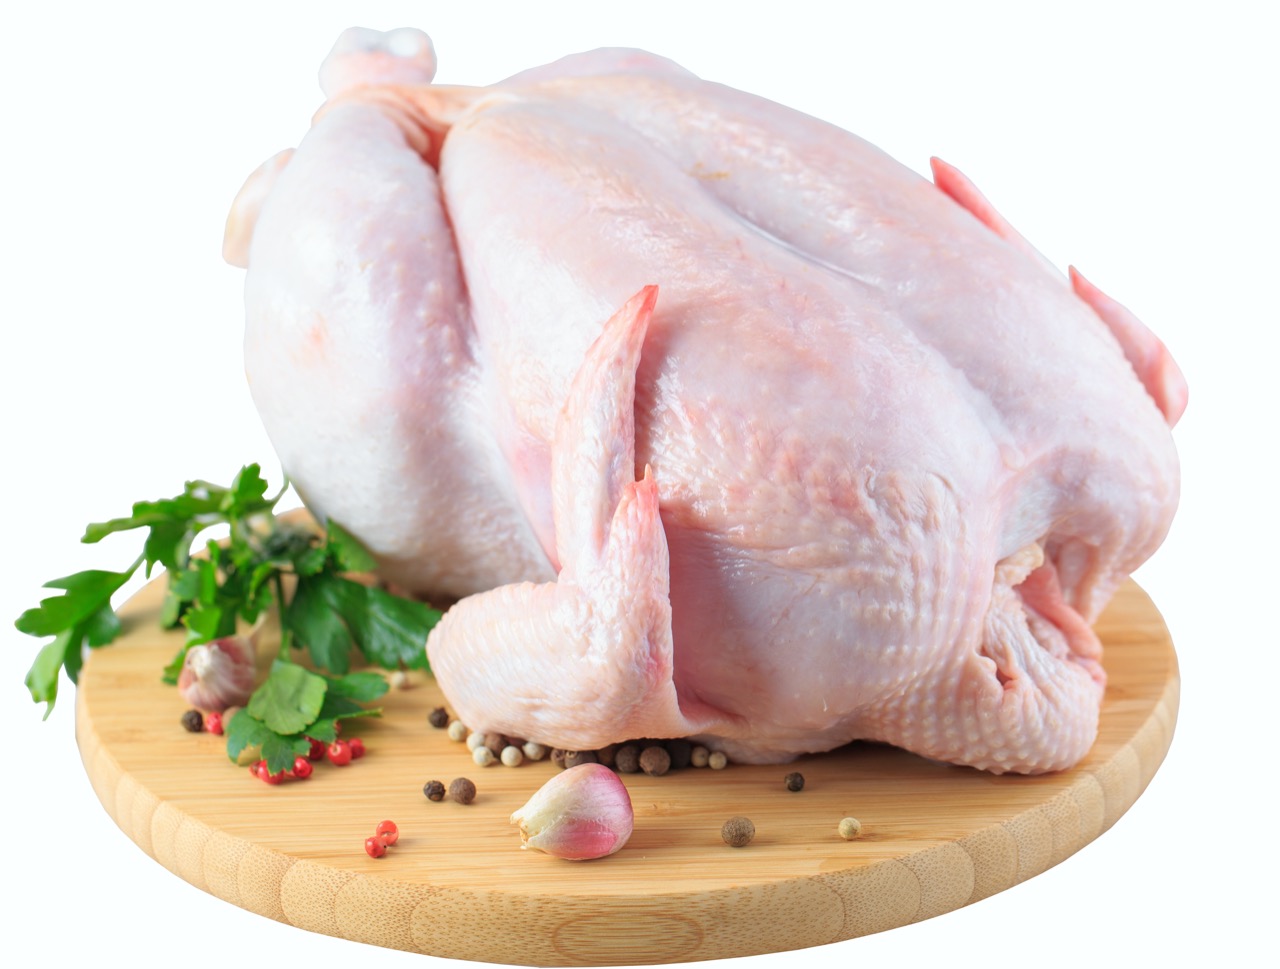 WASPADA! Mengandung Jutaan Parasit, Jangan Kosumsi 3 Bagian ini pada Ayam